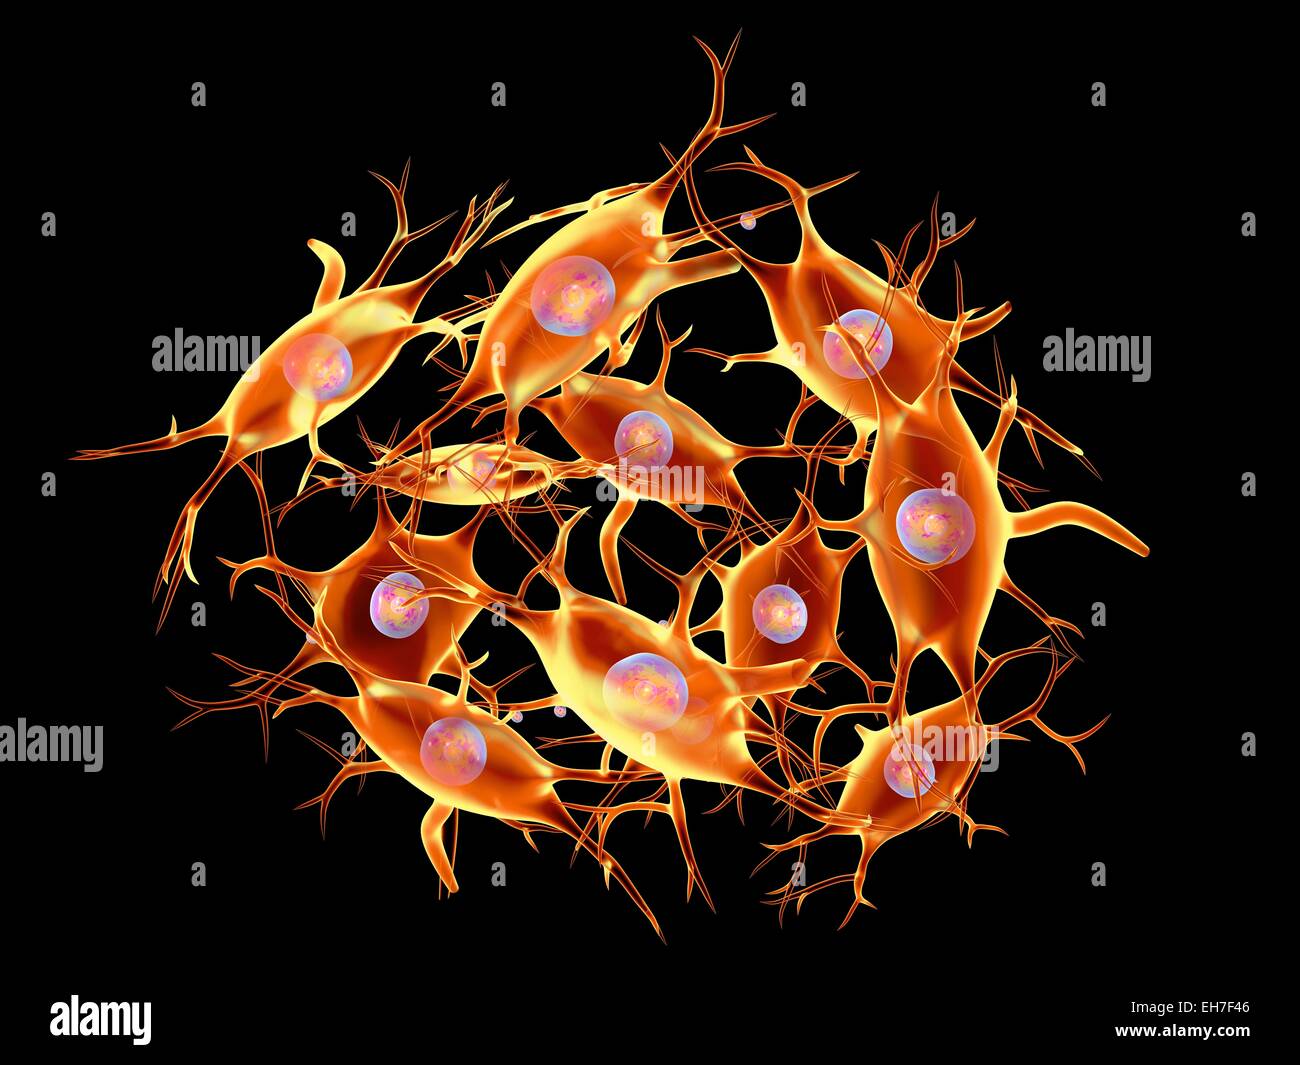 Neural tissue, artwork Stock Photo